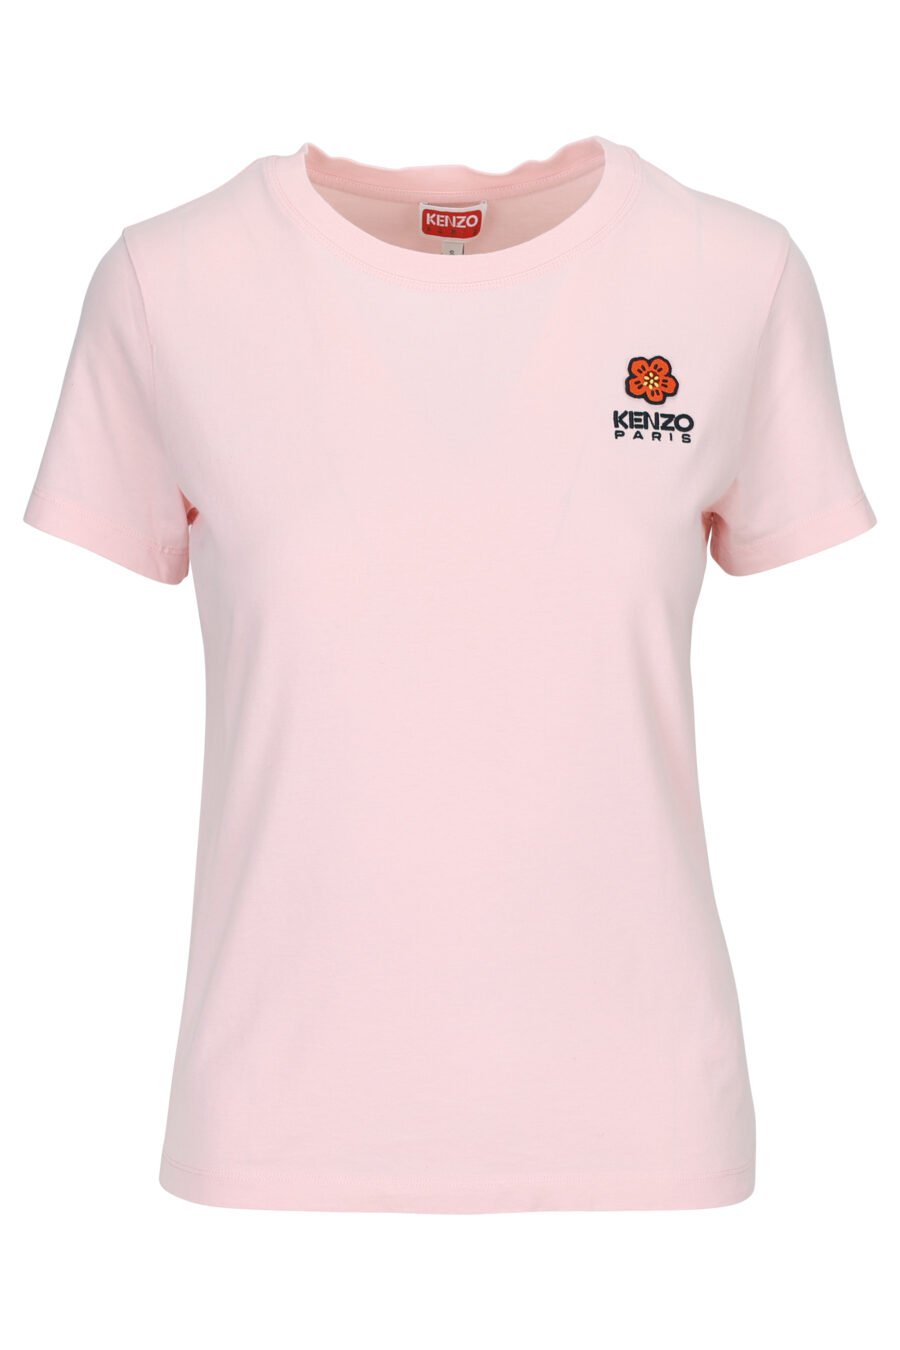 Camiseta rosa con minilogo "boke flower" - 3612230483330